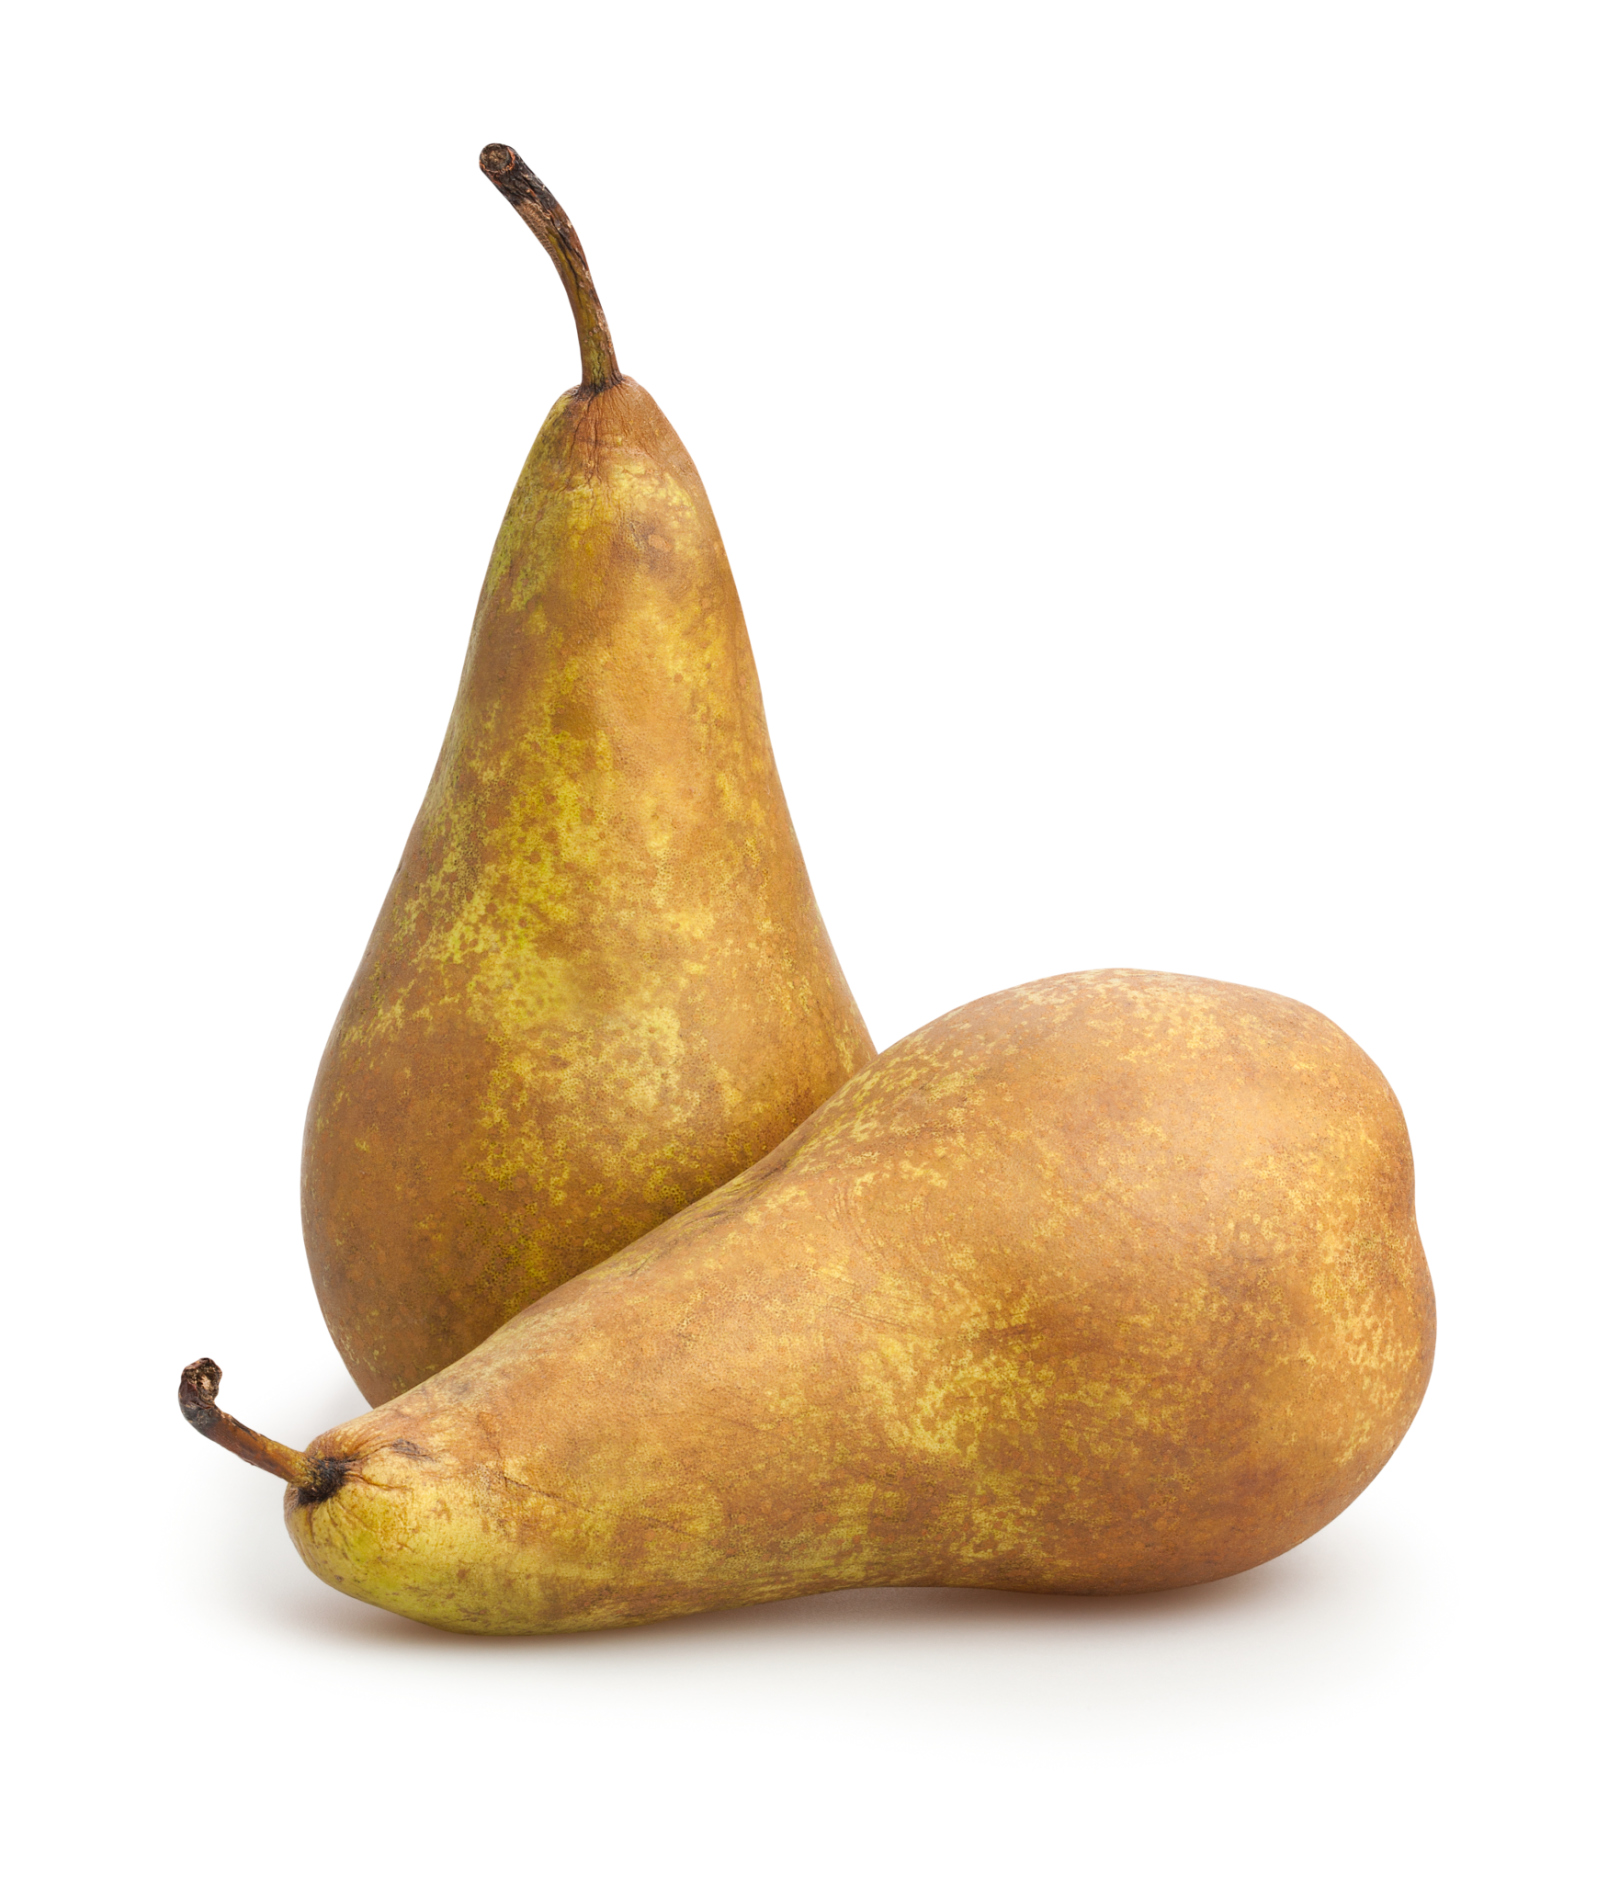 Bosc Pears - Various Partners